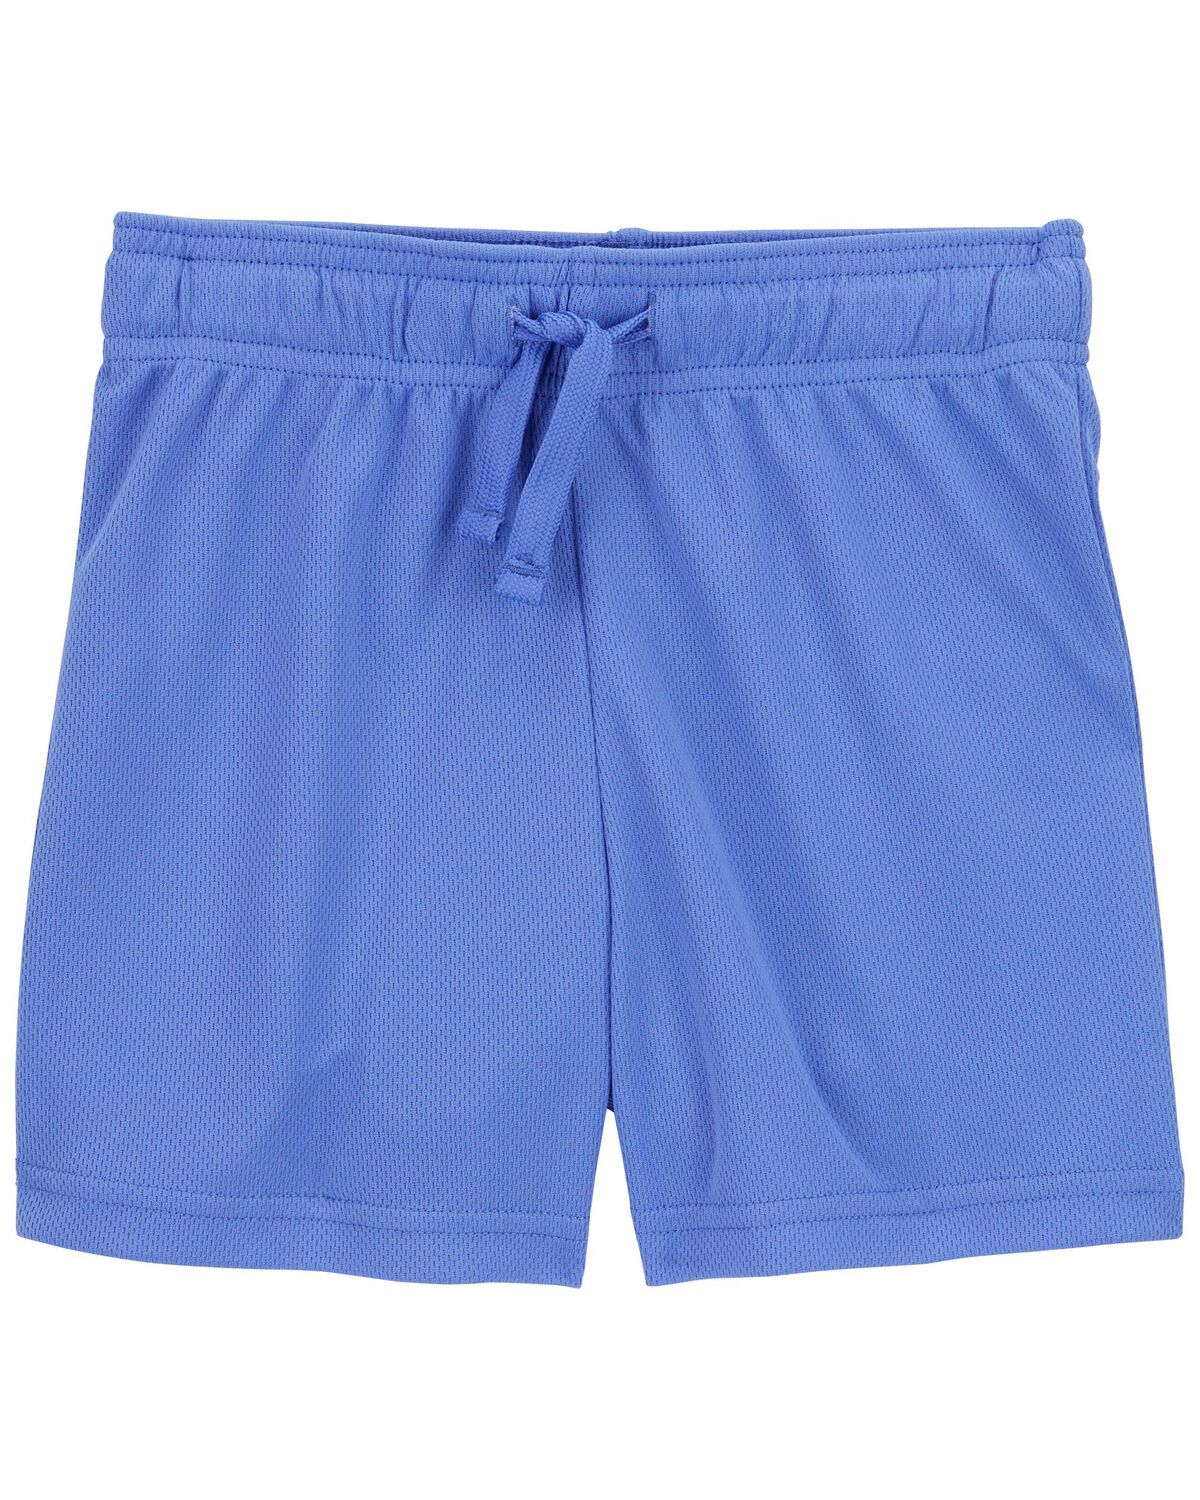 Toddler Athletic Mesh Shorts | Carter's